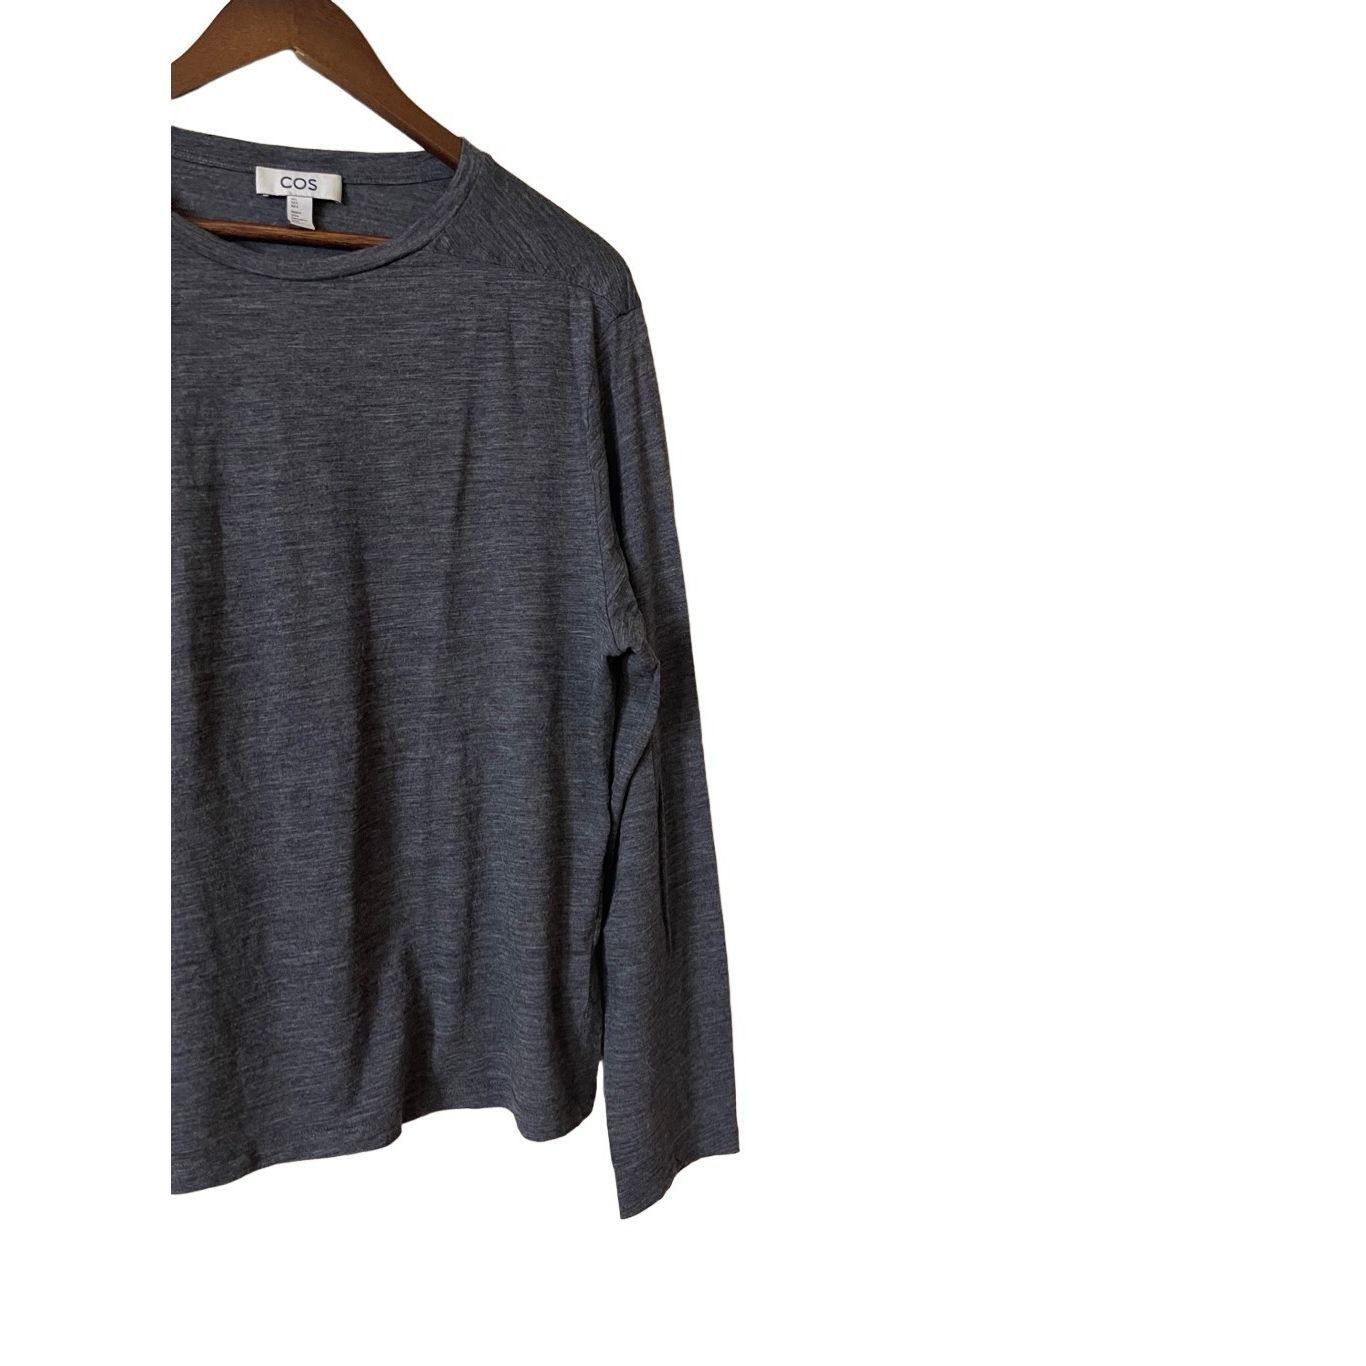 Cos COS 100% Wool Grey Crewneck Long Sleeve Lightweight Sweater Size US L / EU 52-54 / 3 - 9 Thumbnail